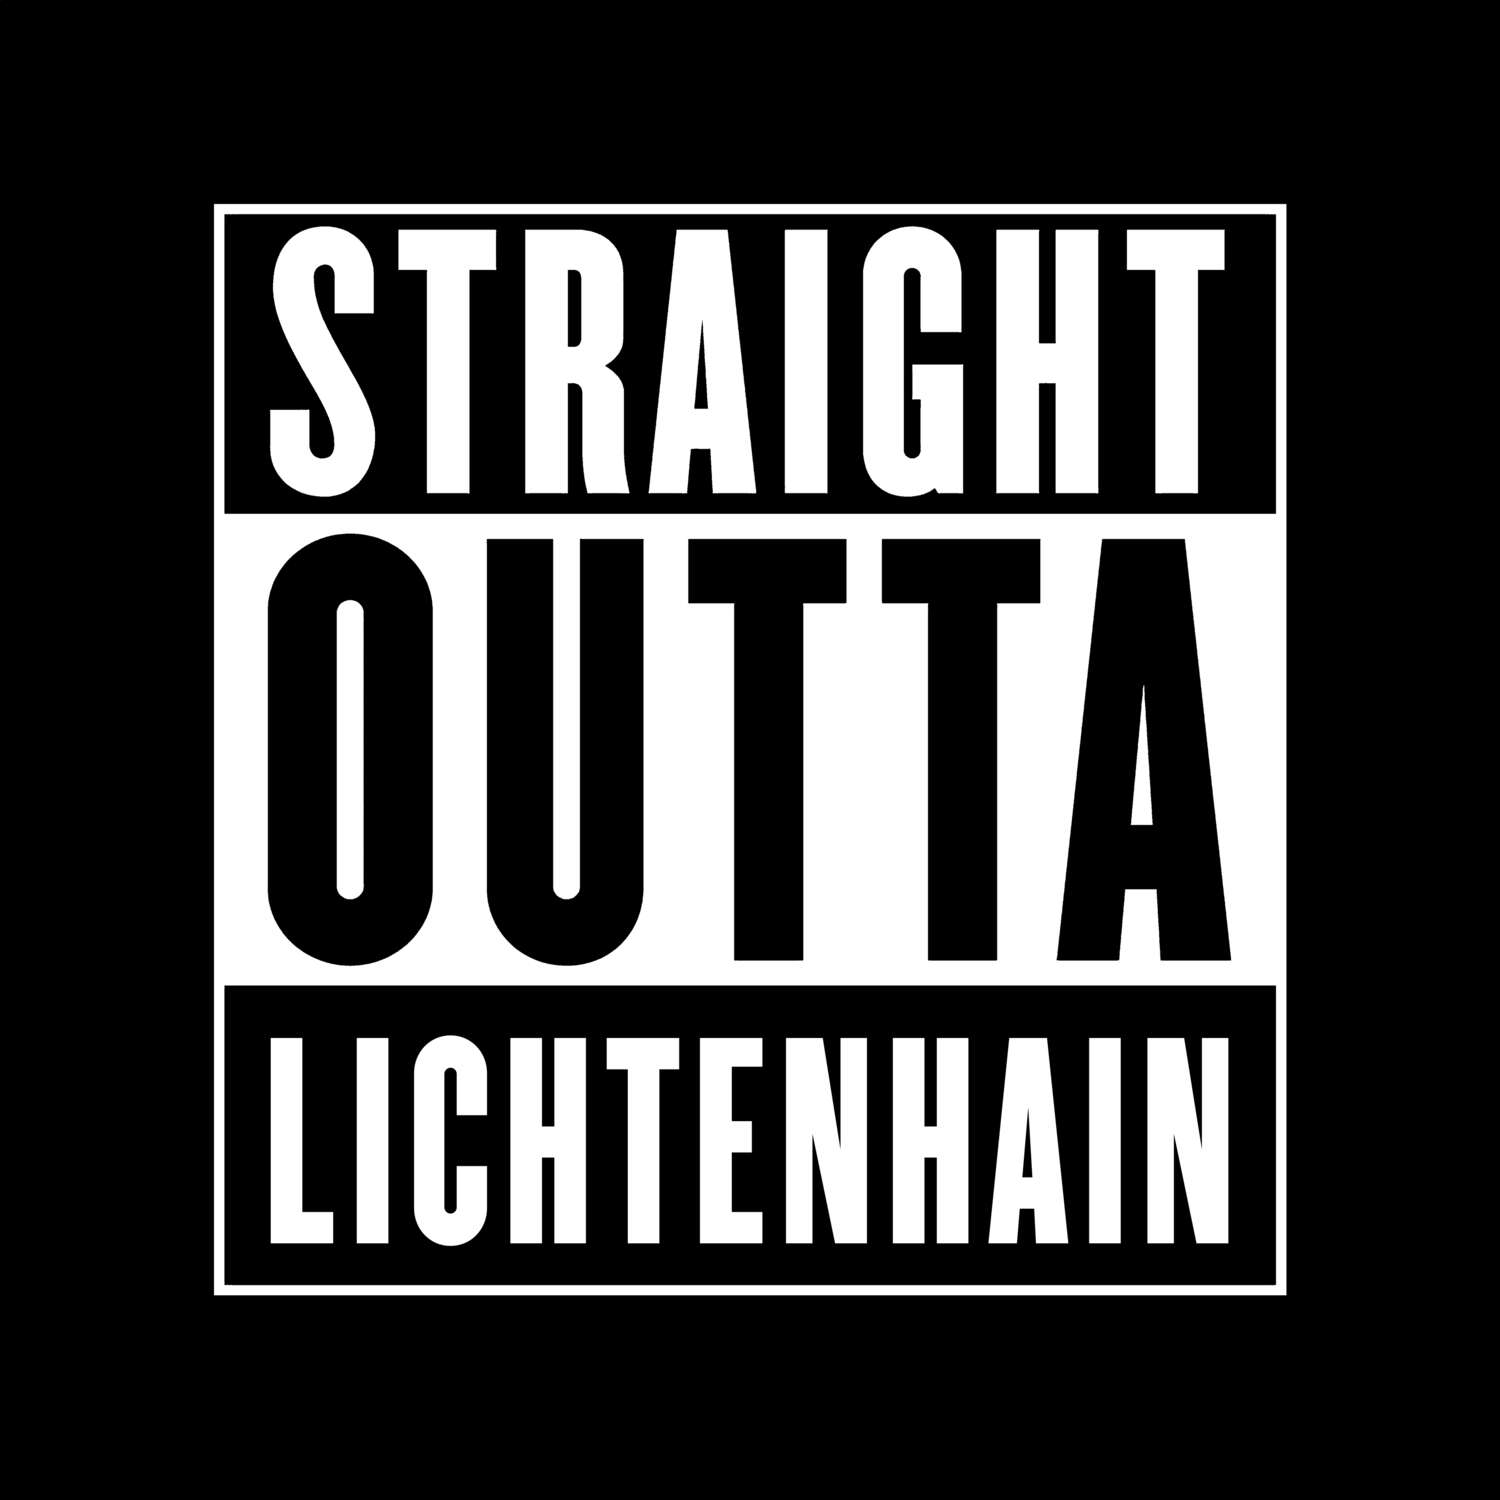 Lichtenhain T-Shirt »Straight Outta«